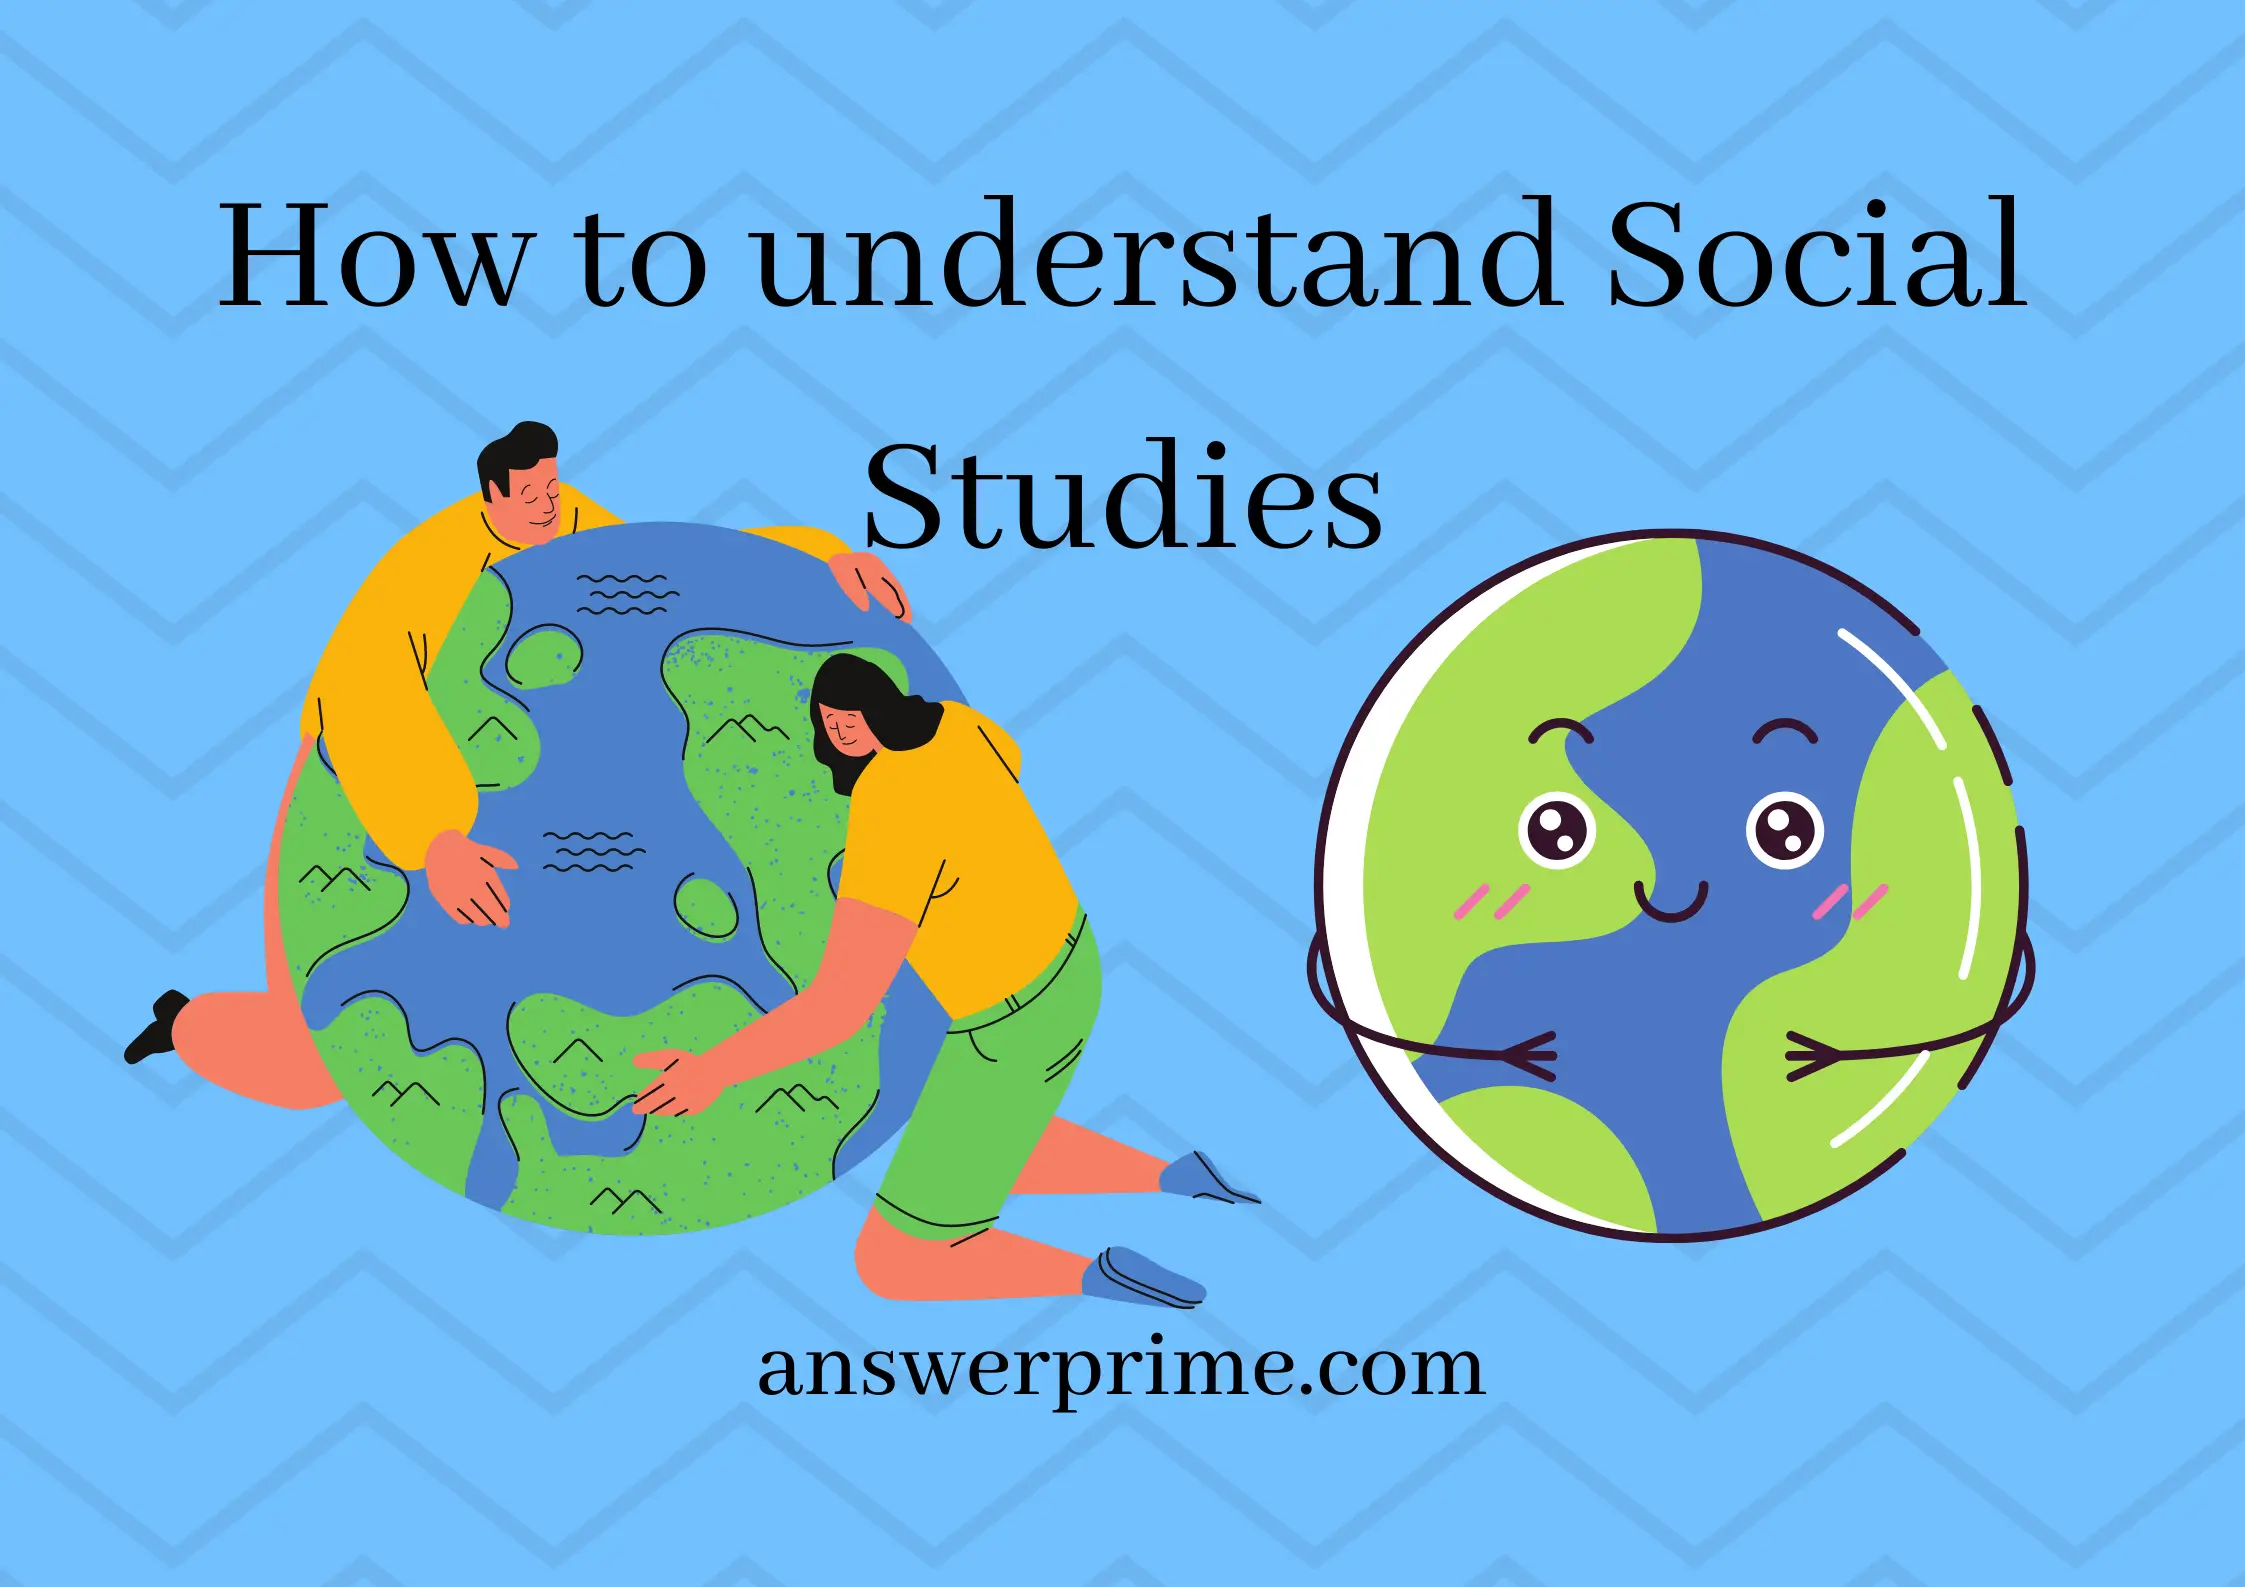 How to understand Social Studies